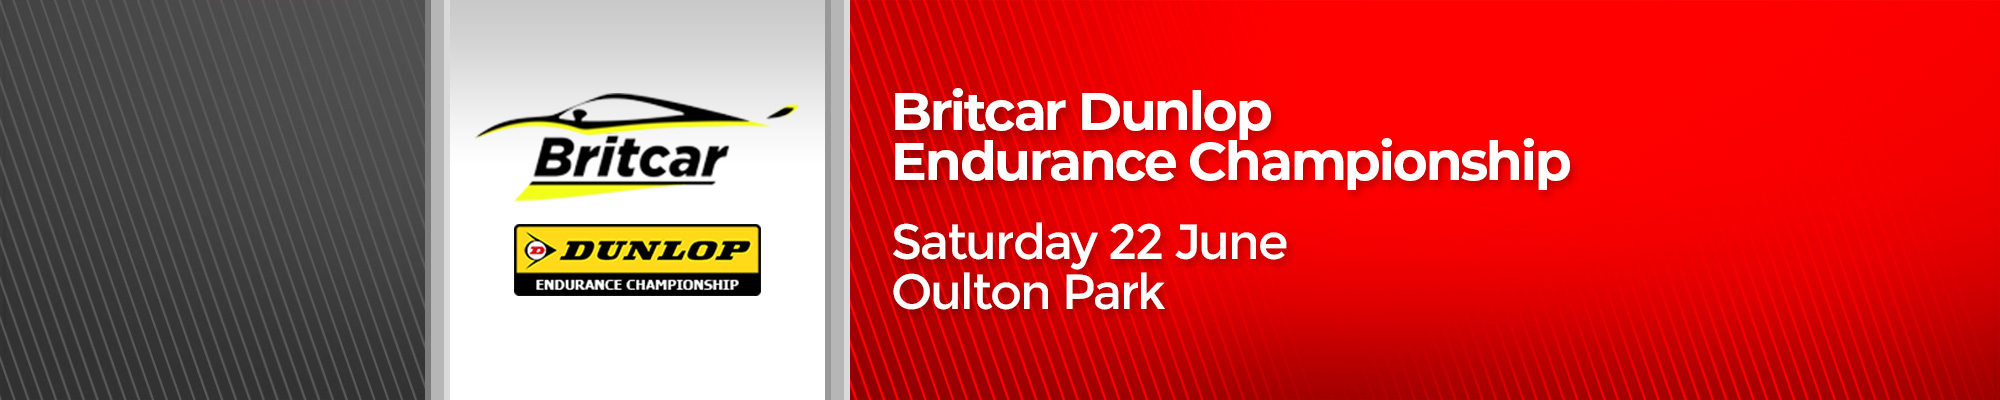 Britcar Dunlop Endurance Championship